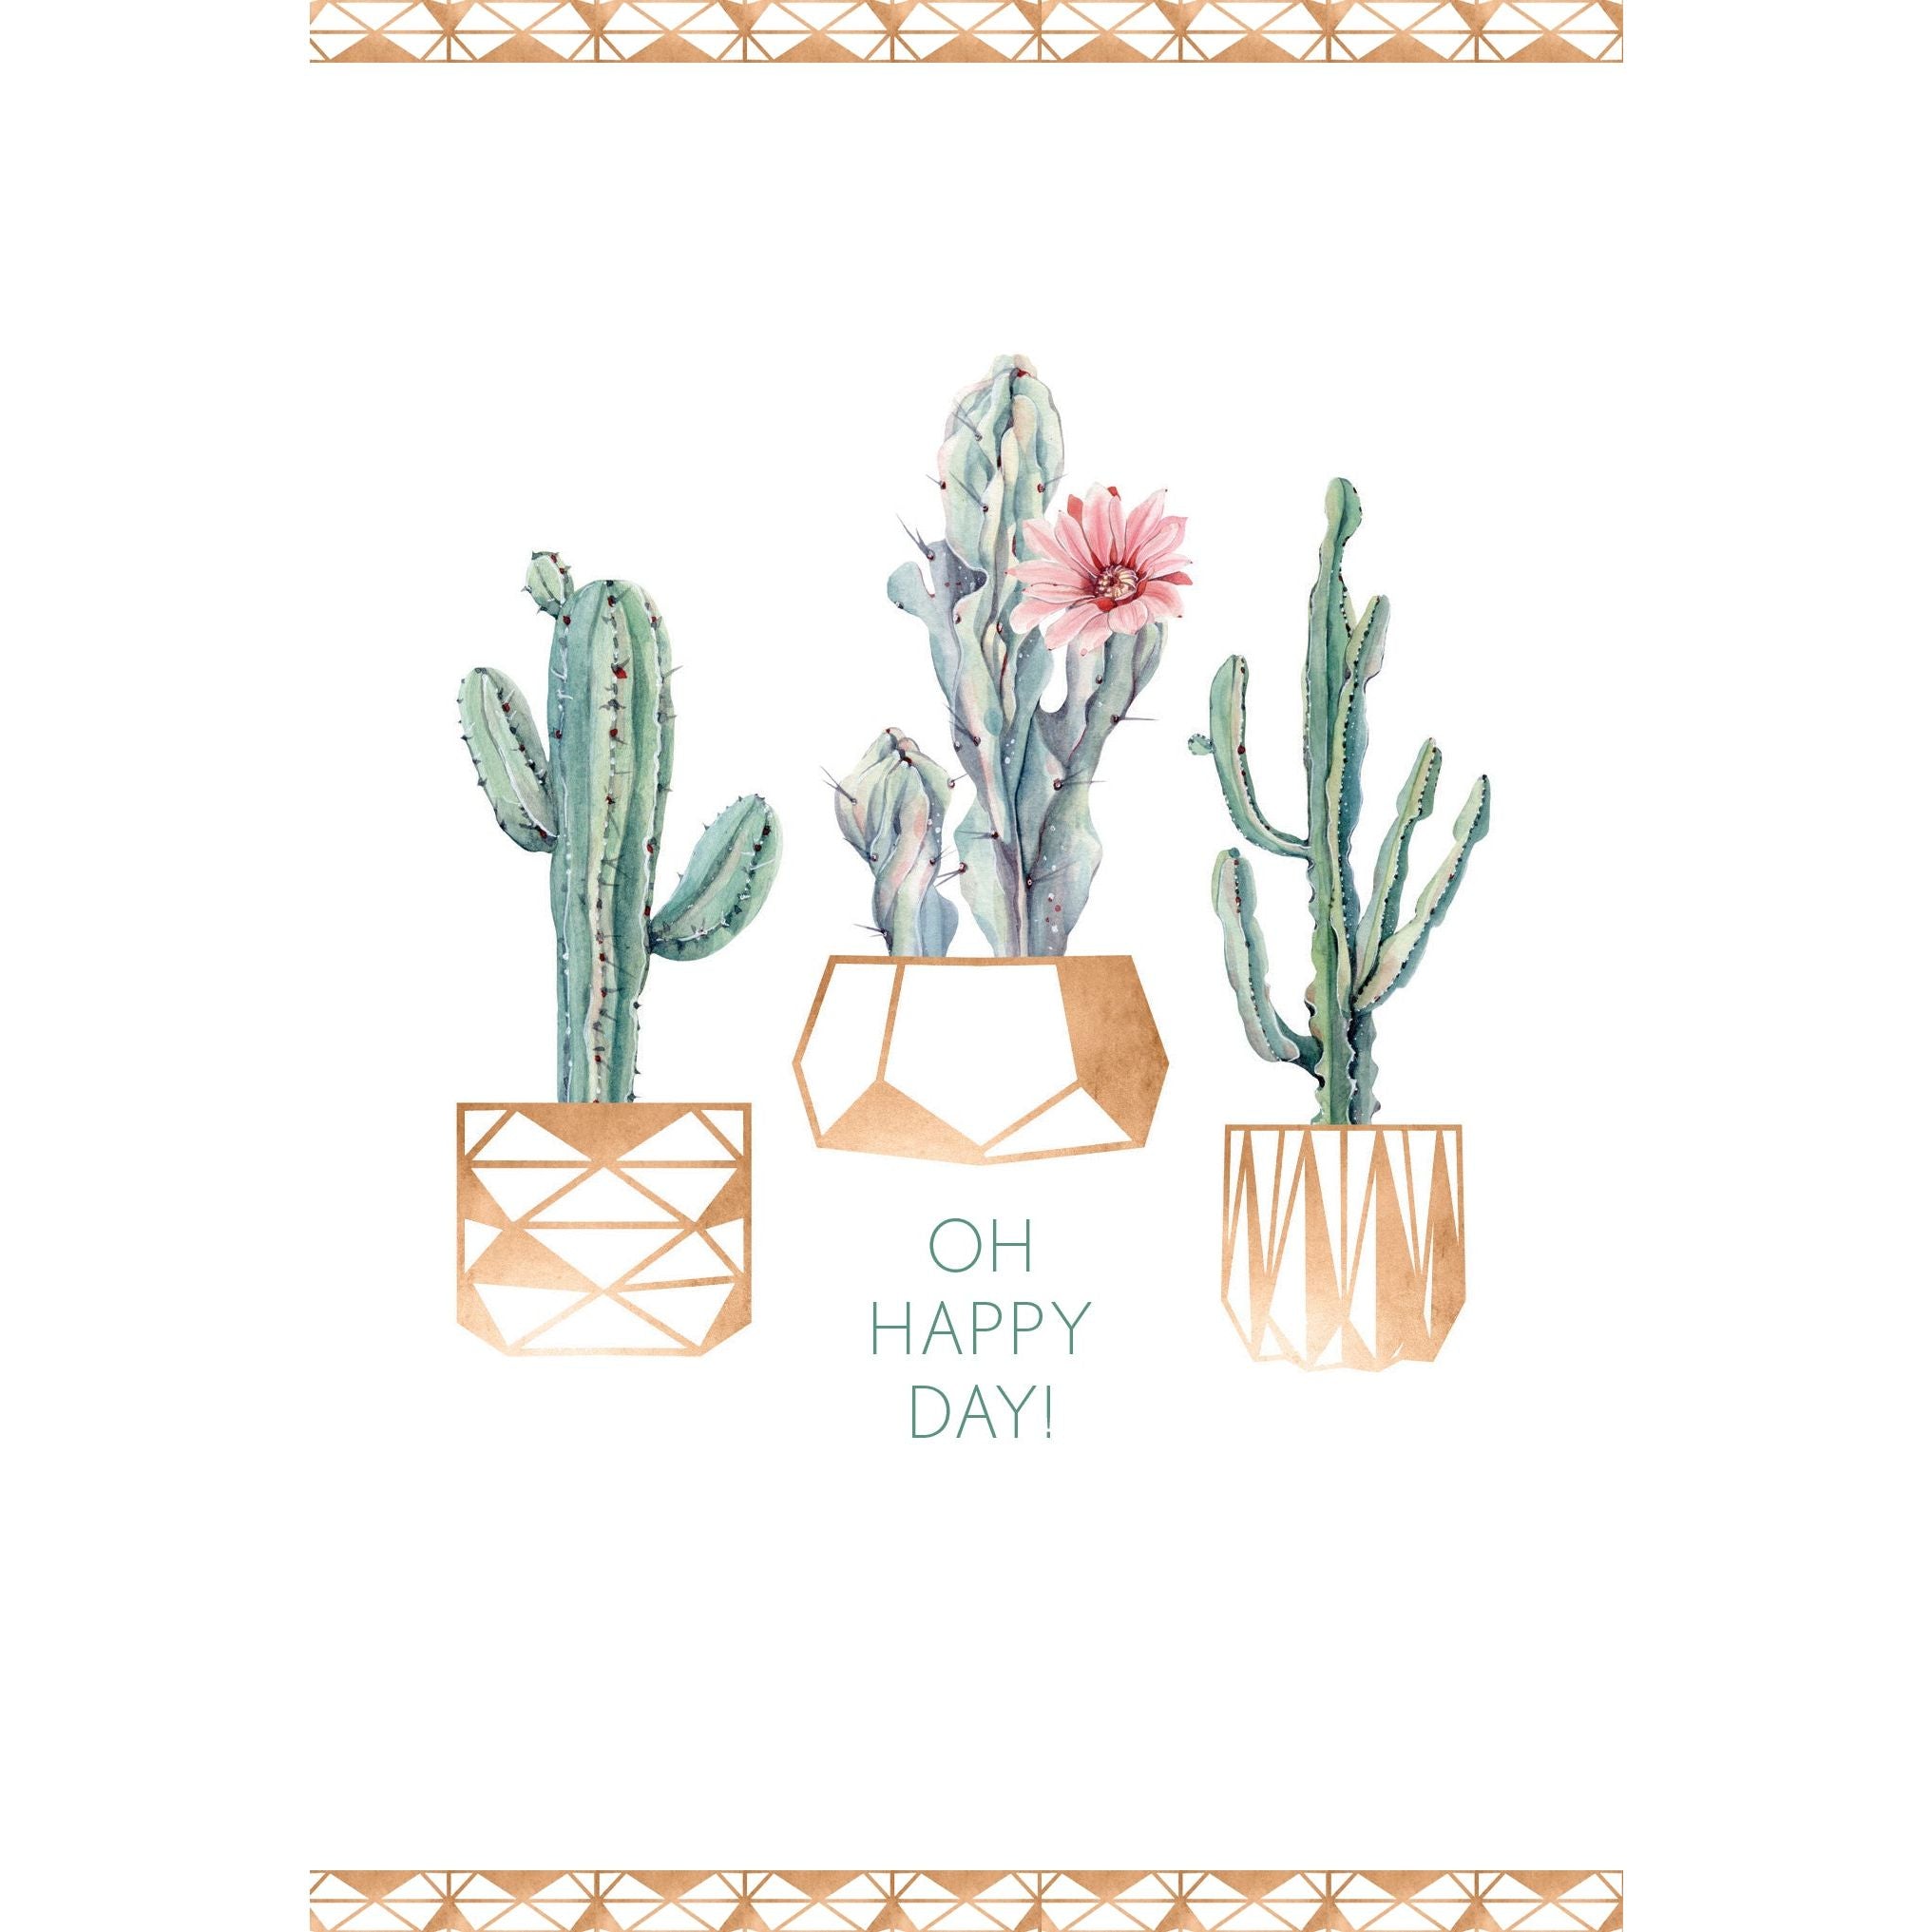 Cactus in Pots Birthday Card - Cardmore